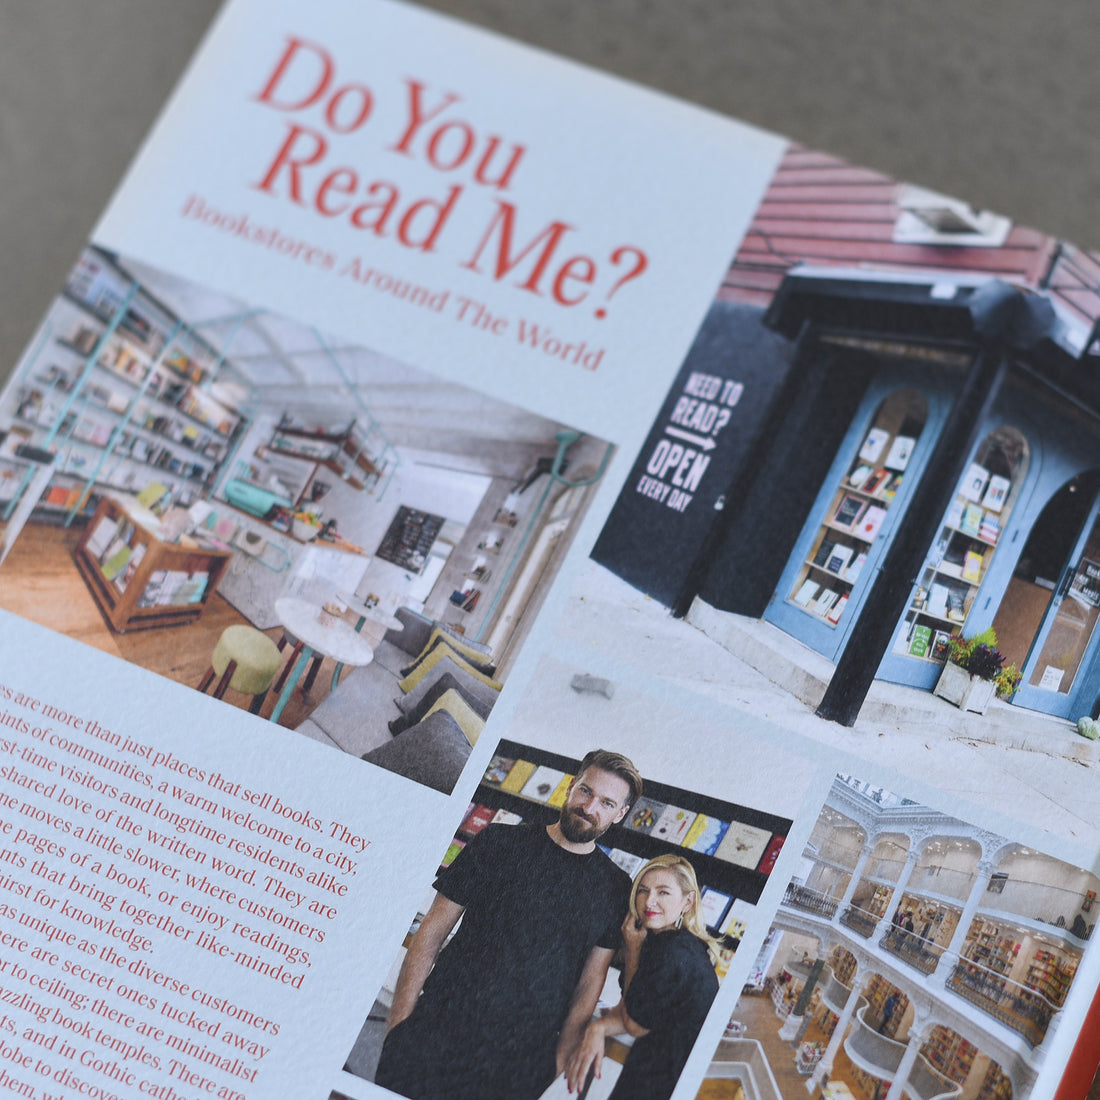 Do You Read Me? Bookstores around the World